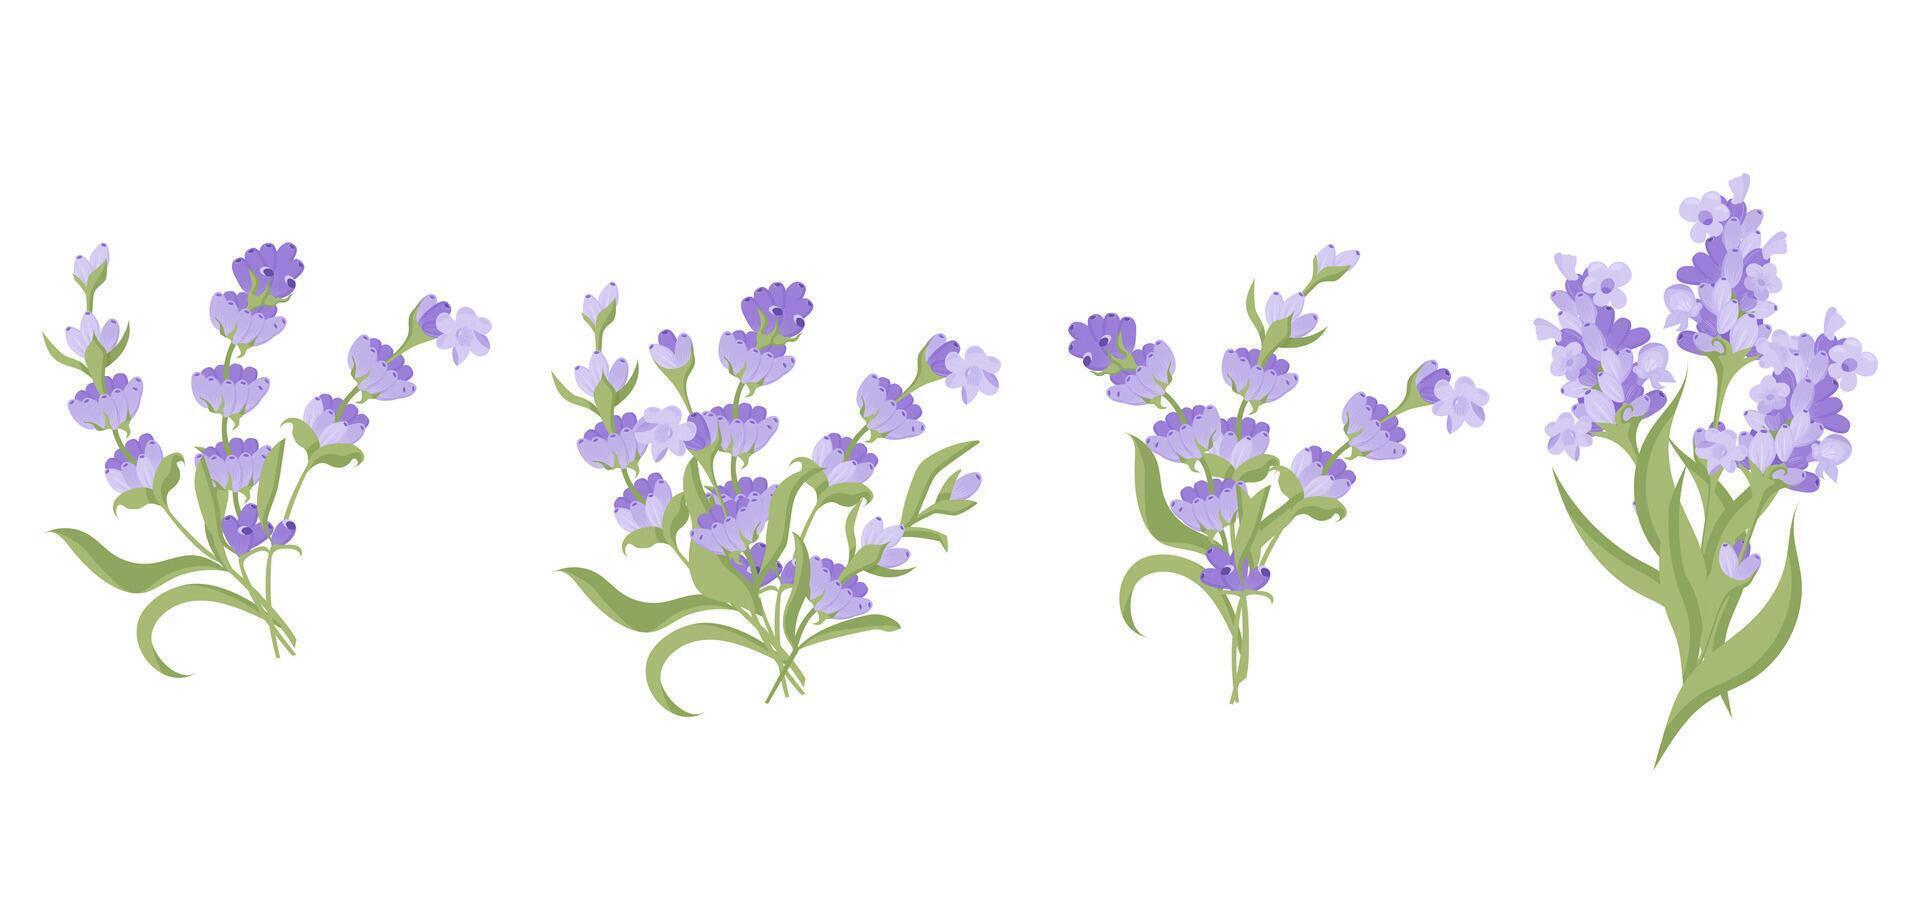 uppsättning av buketter av lavendel- blommor. vektor illustration isolerat på vit bakgrund.